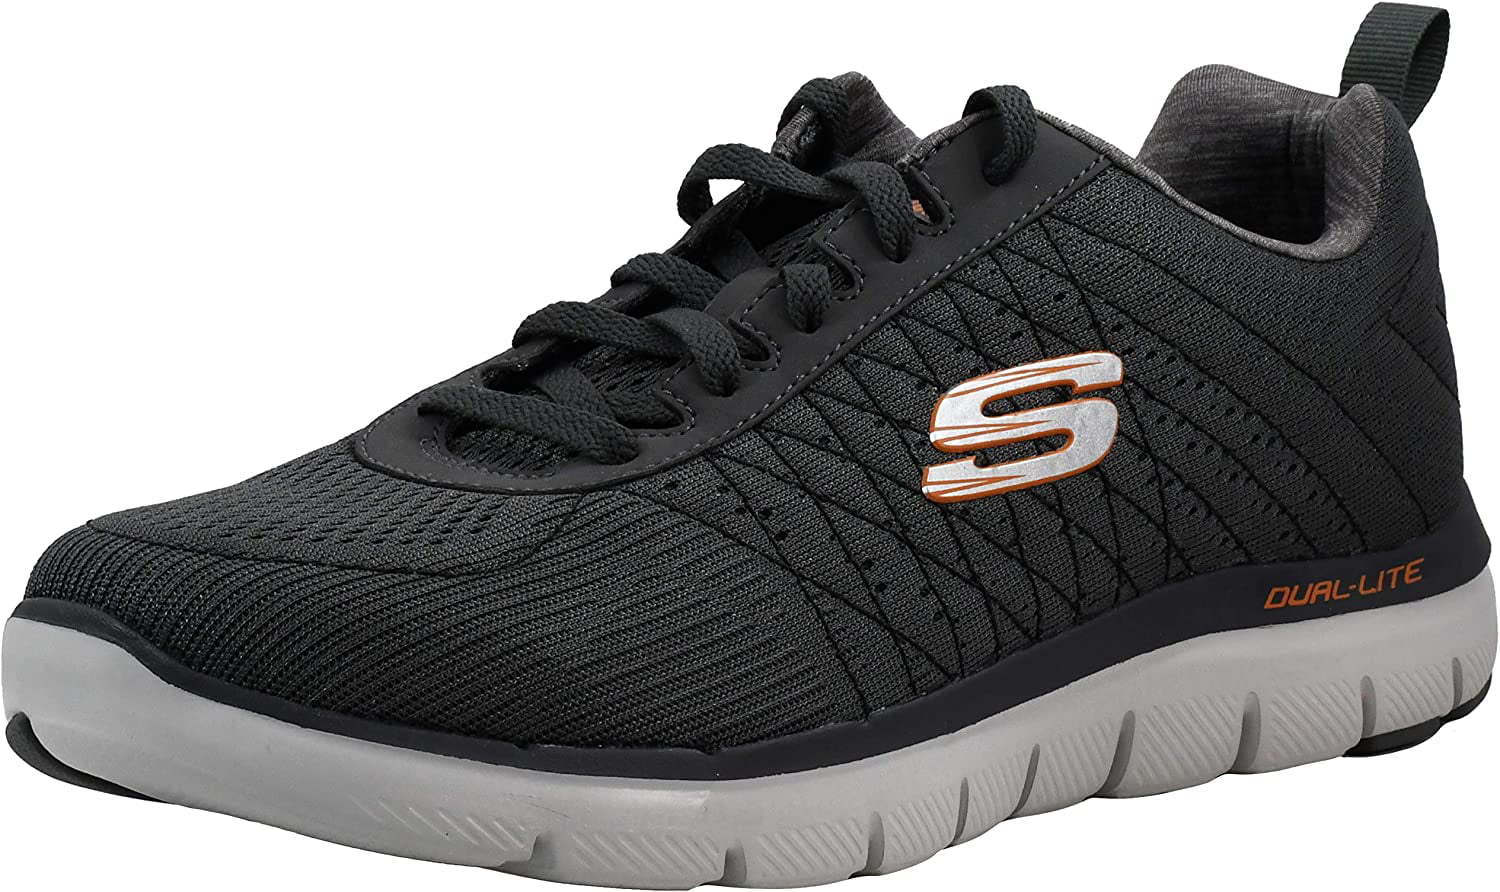 52185 Black Skechers Shoes Men Foam Comfort Sport Run Mesh Athletic - Walmart.com